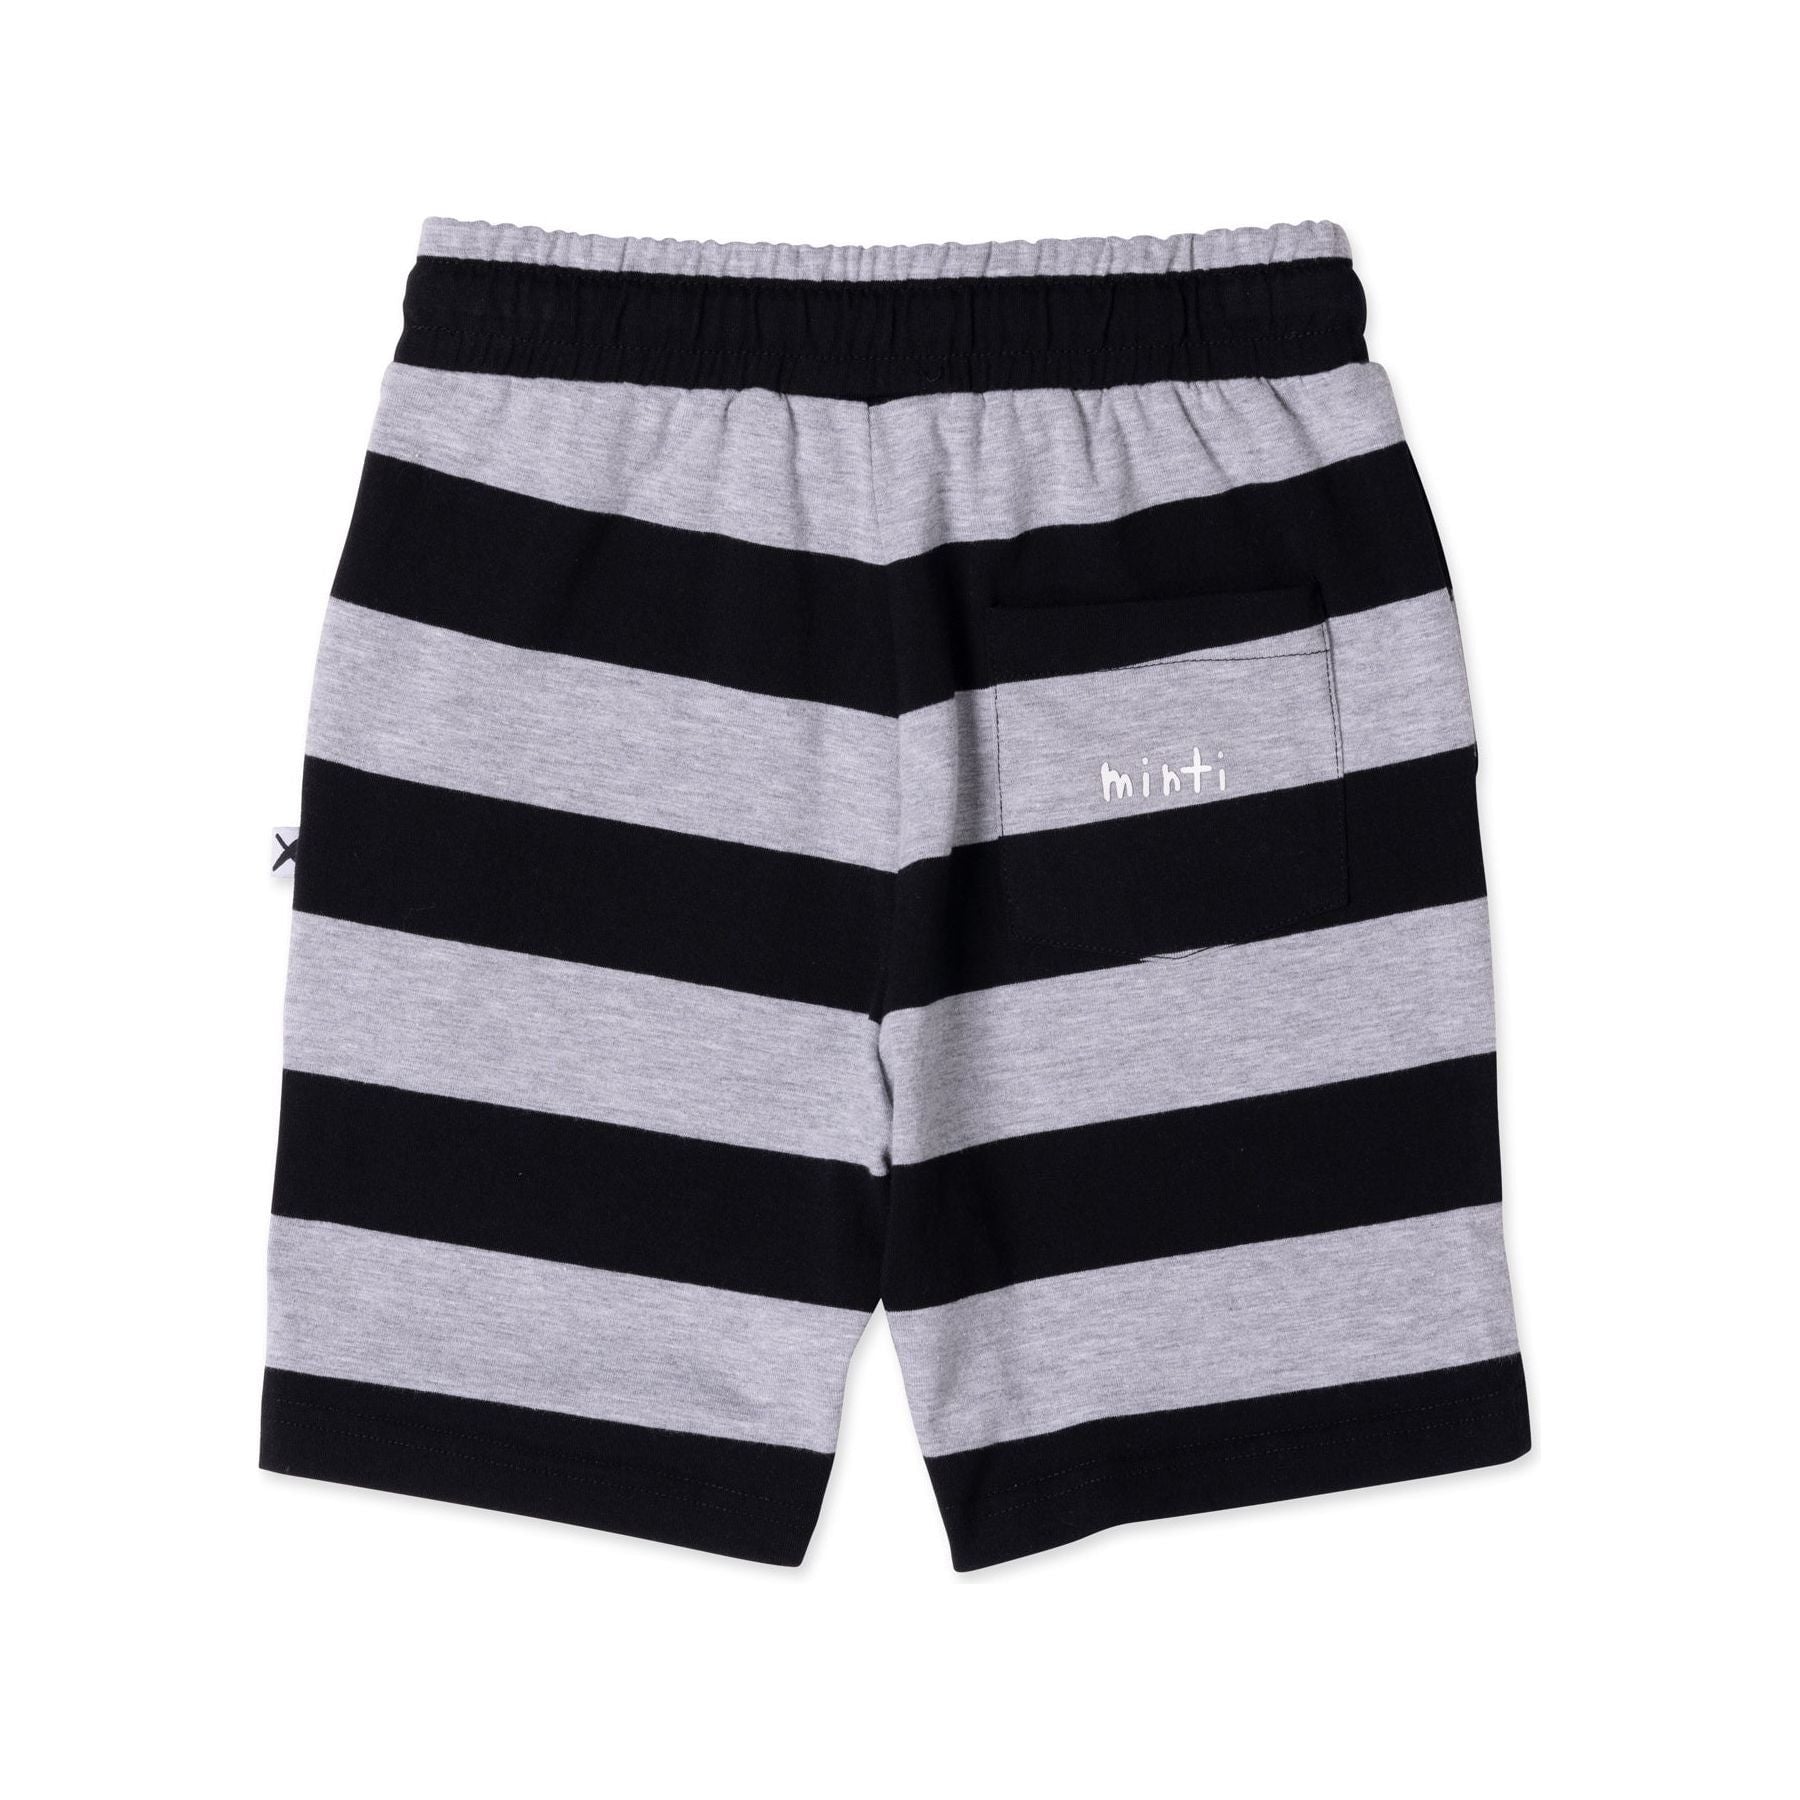 Duo Short- Black/Grey Marle Stripe